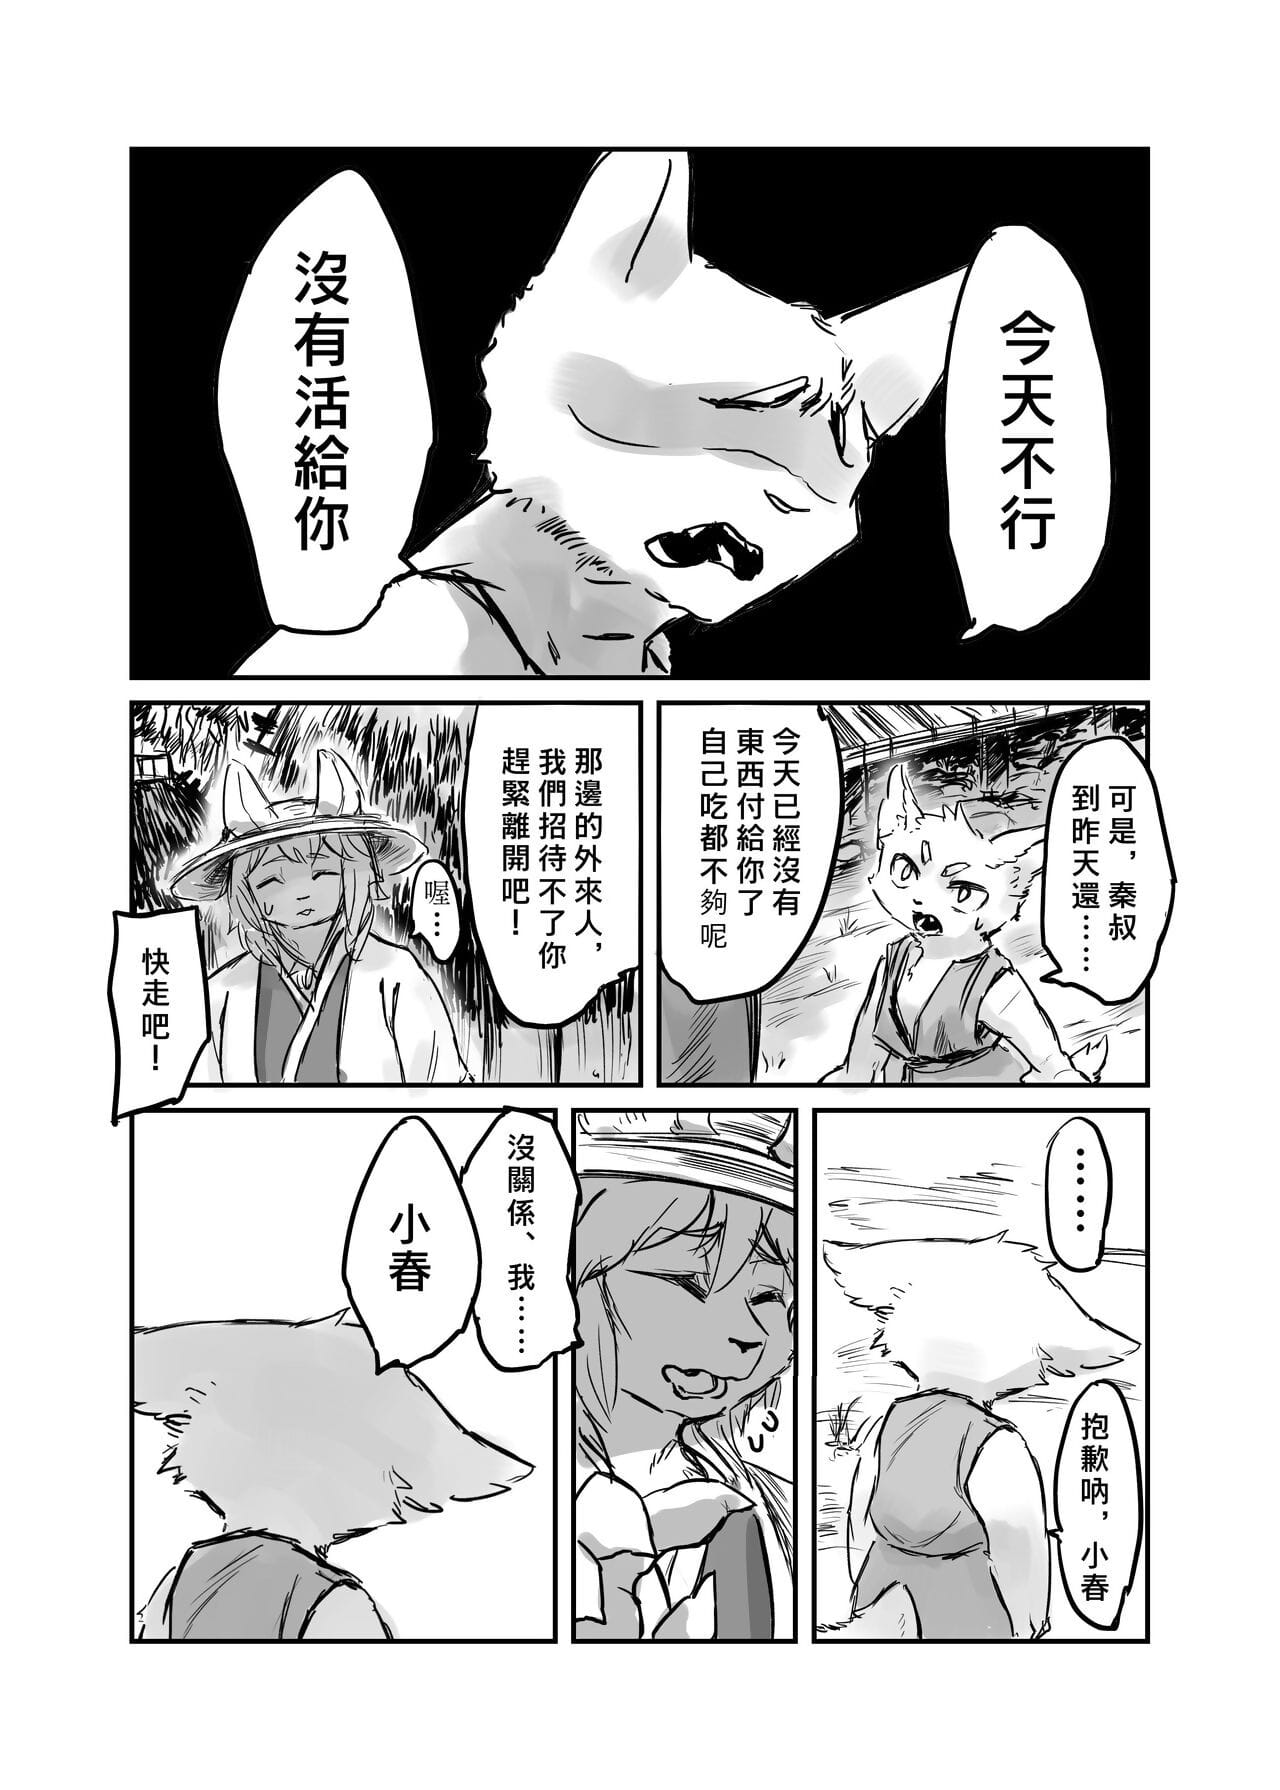 （the आगंतुक 他乡之人 by：鬼流 page 1